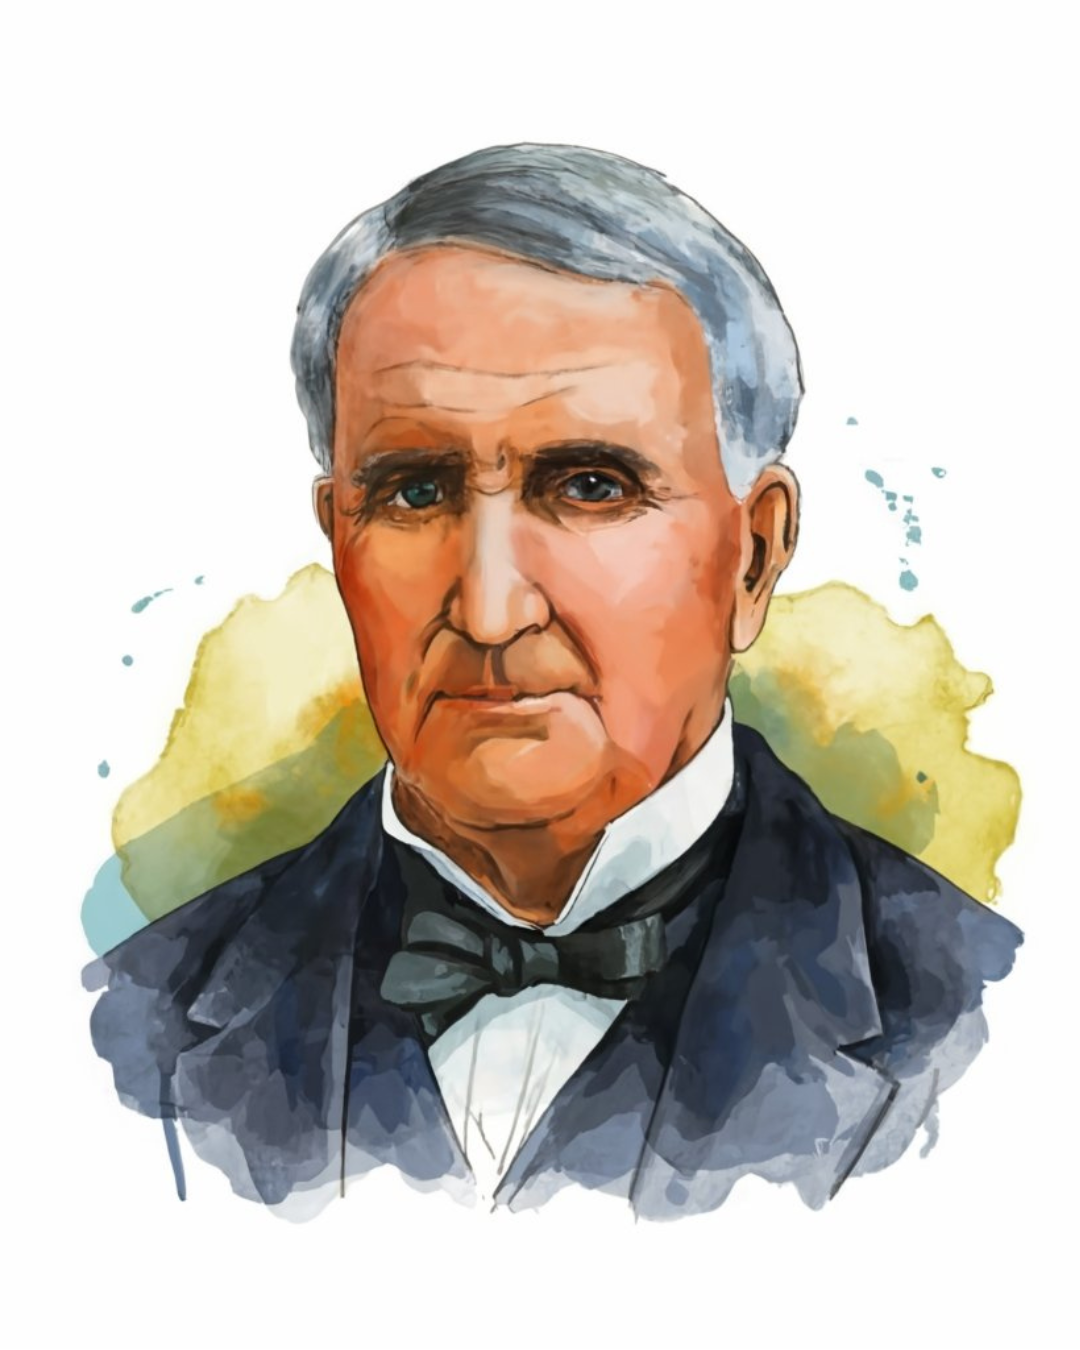 Thomas A. Edison Hand drawn watercolor portrait